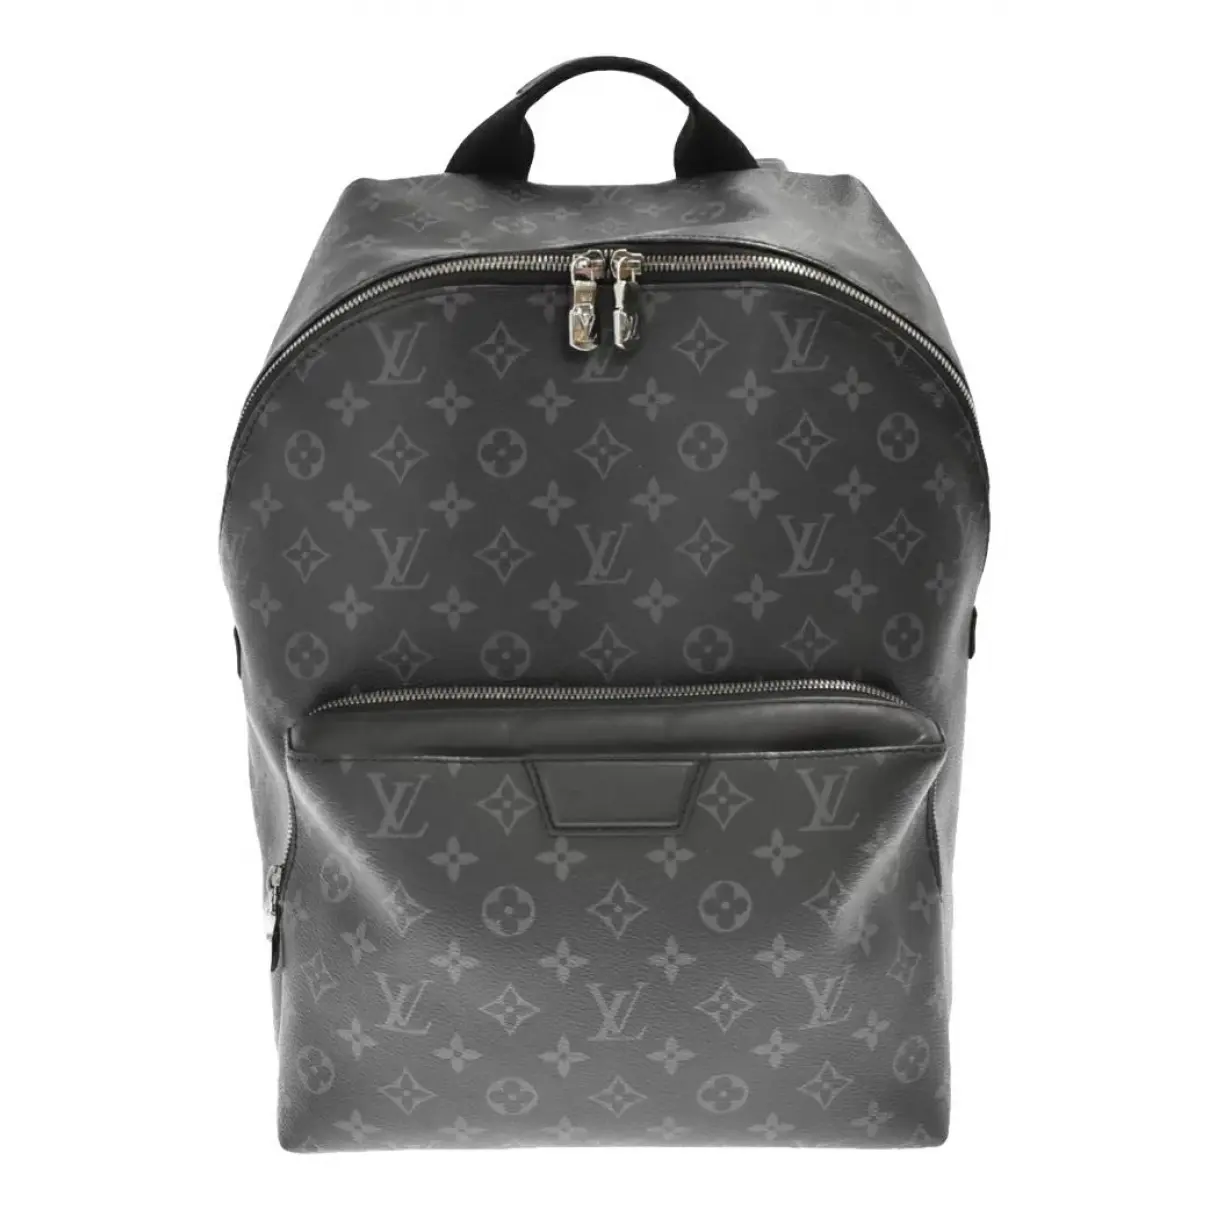 Apollo Backpack leather handbag